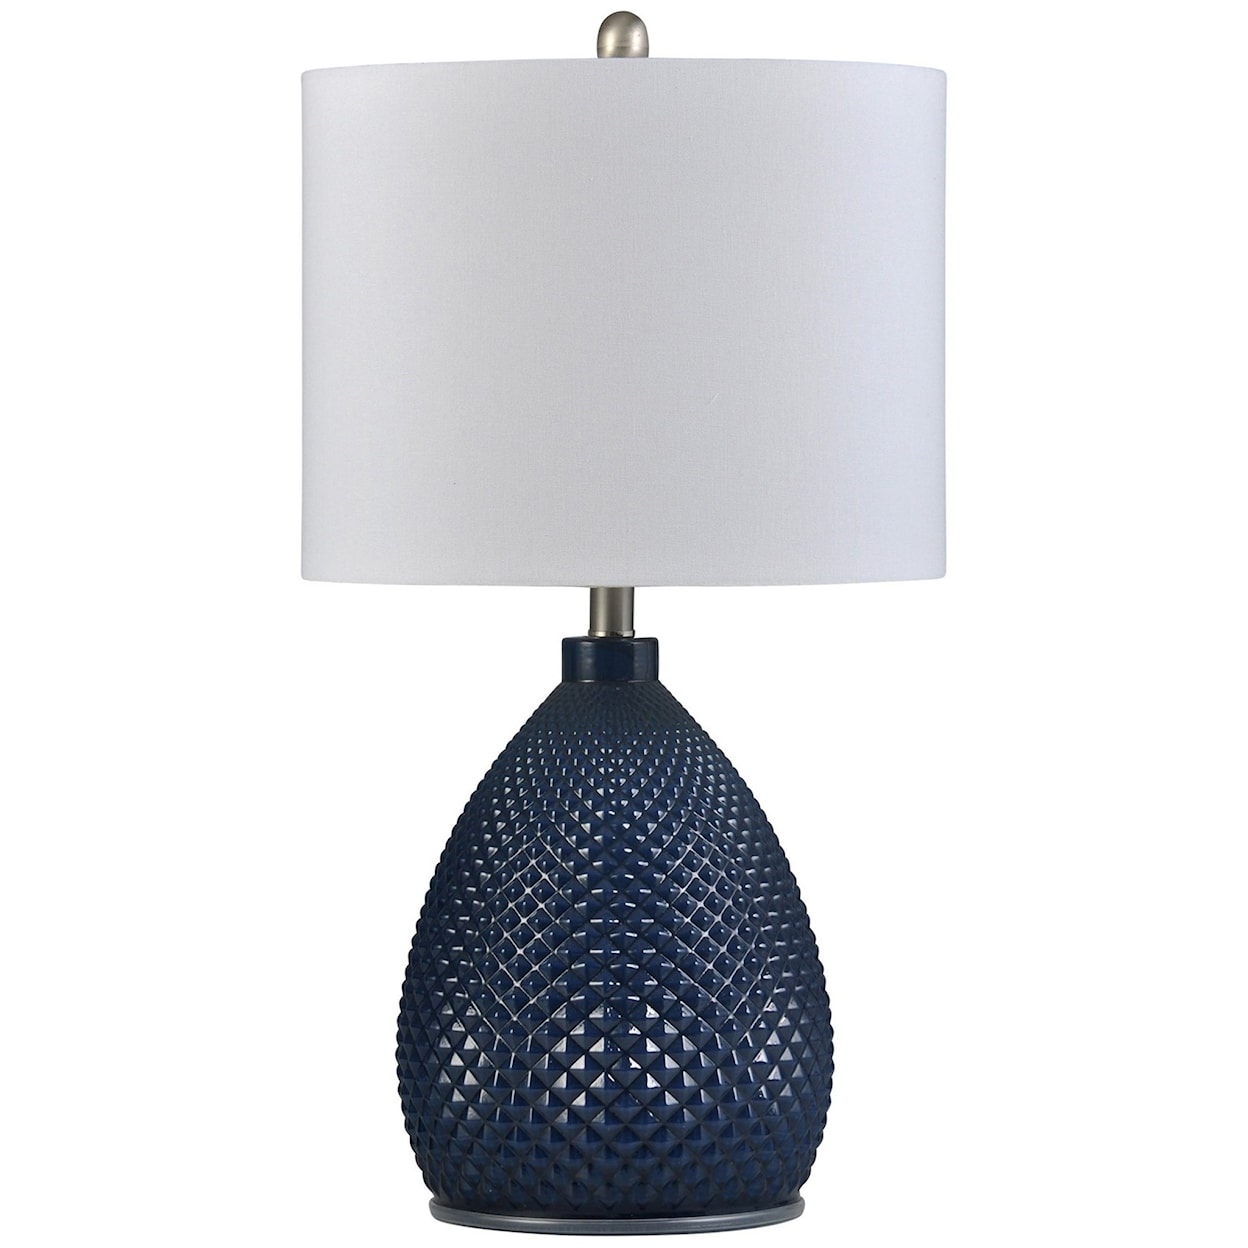 StyleCraft Lamps Navy Blue Lamp